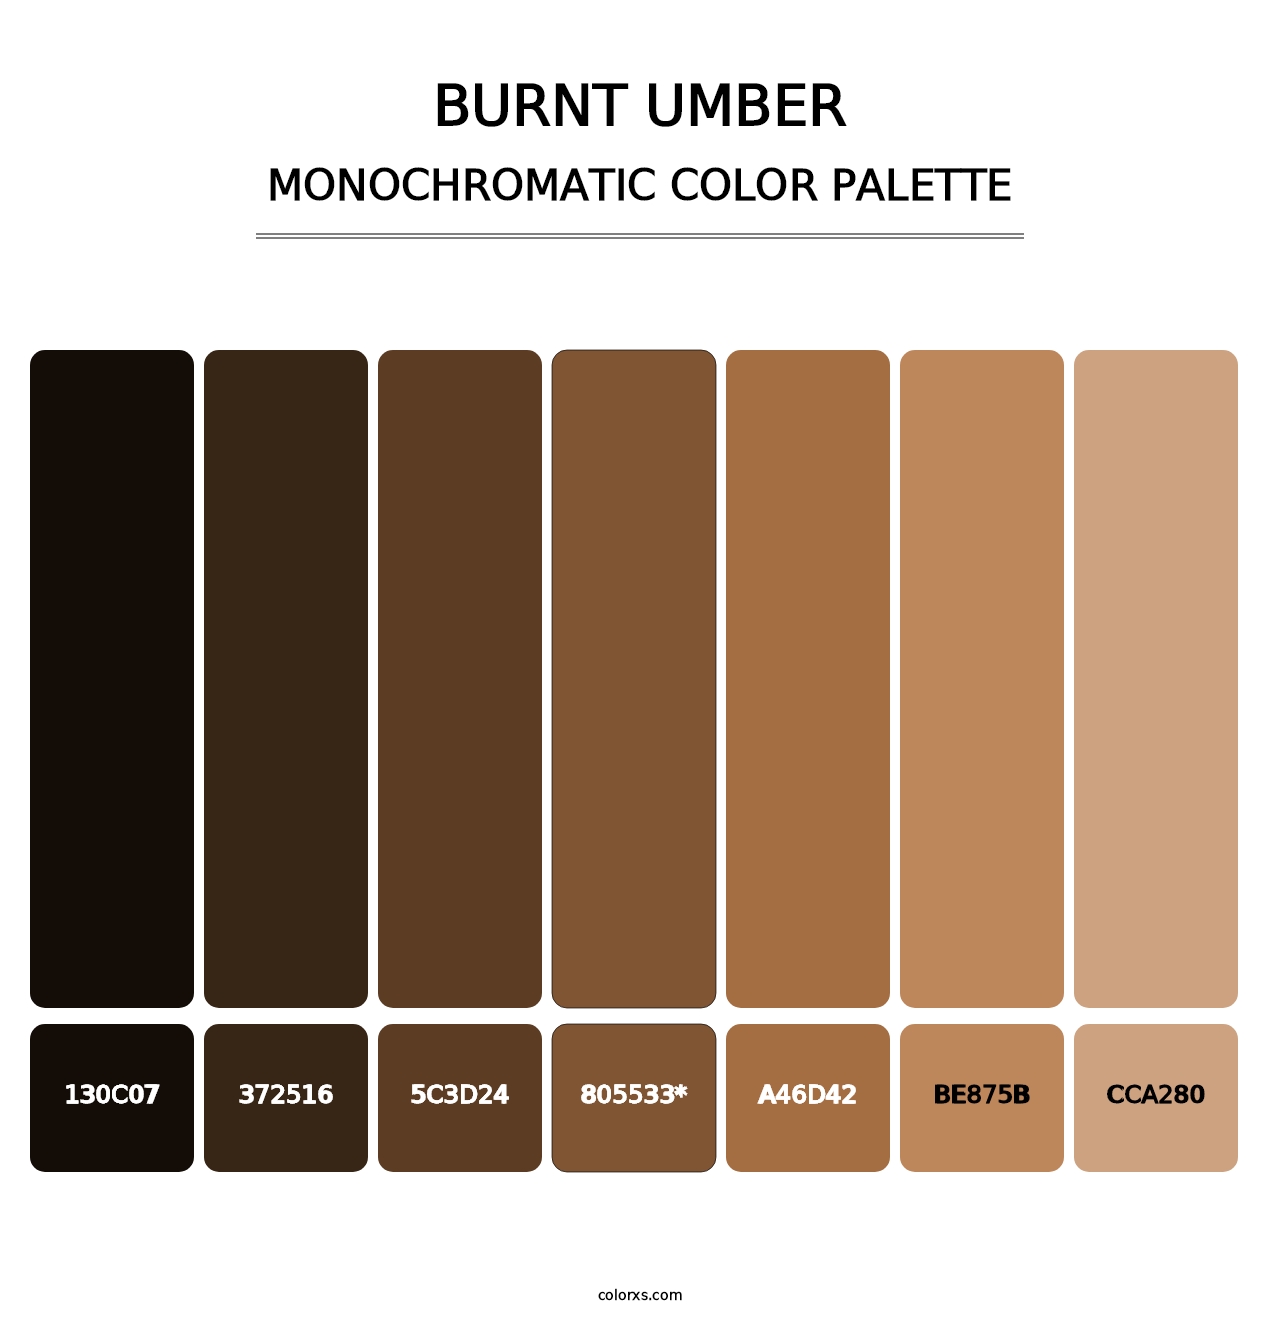 Burnt Umber - Monochromatic Color Palette